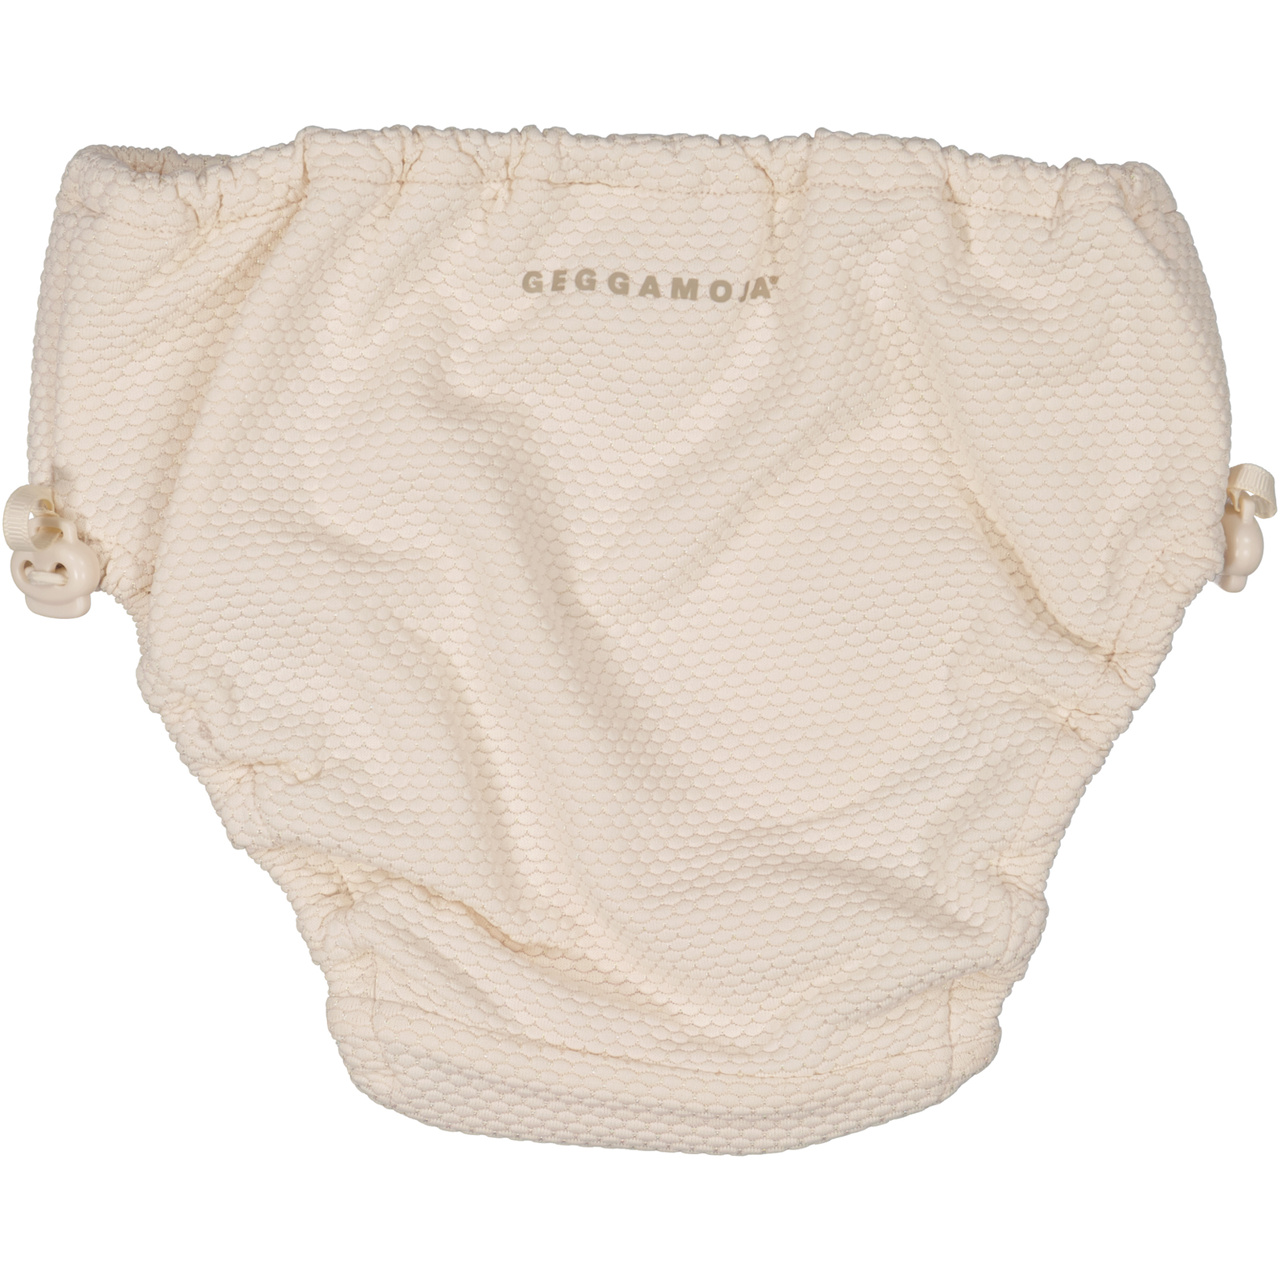 UV Baby swim pants Soft beige